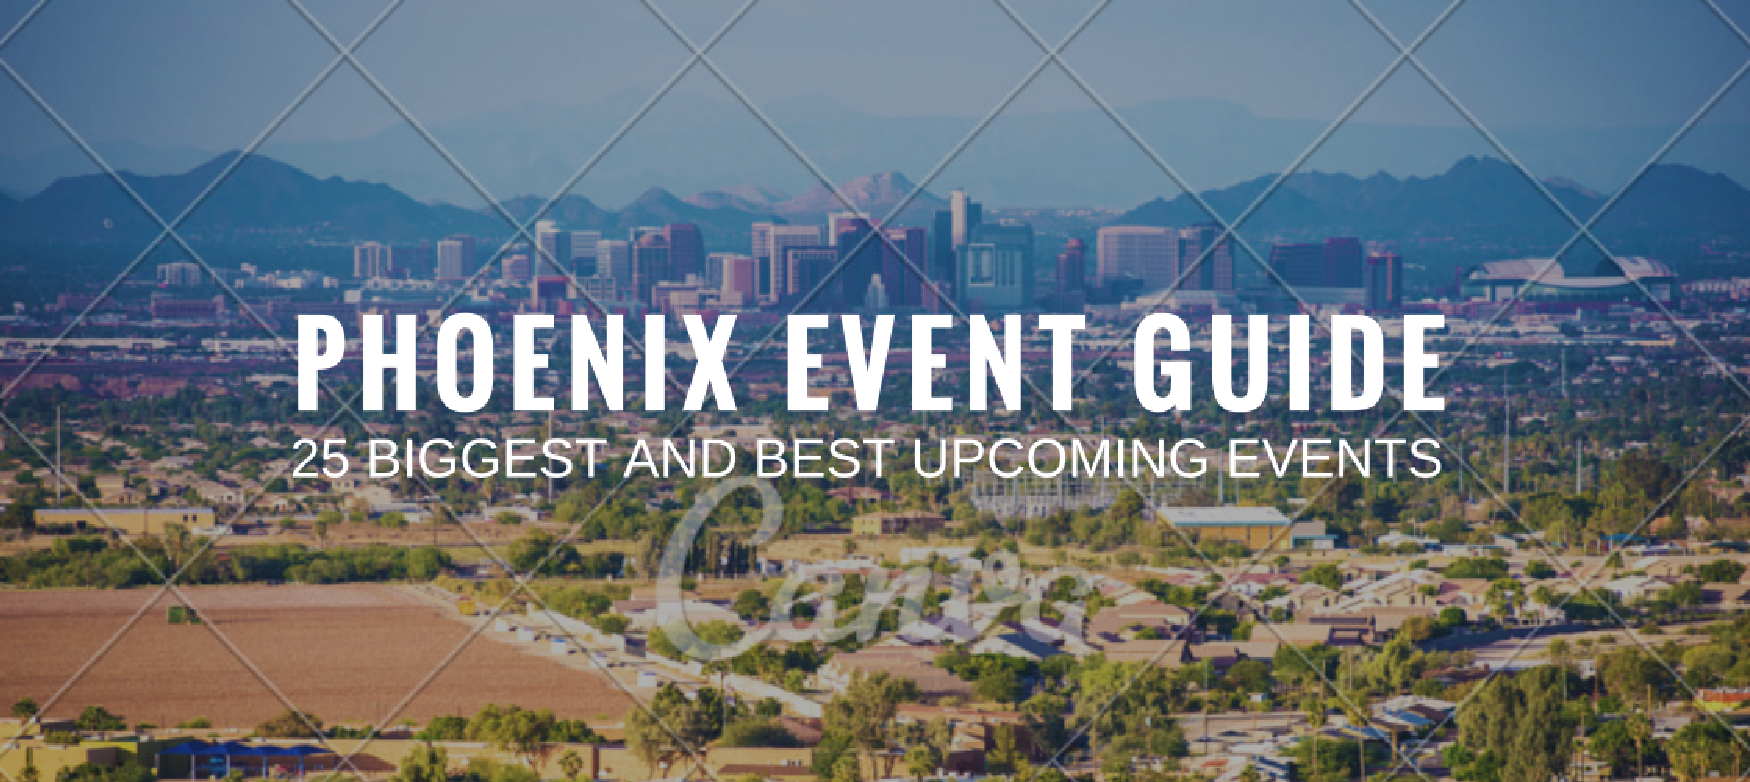 Event Guide Biggest & Best Events Greater Phoenix Arizona